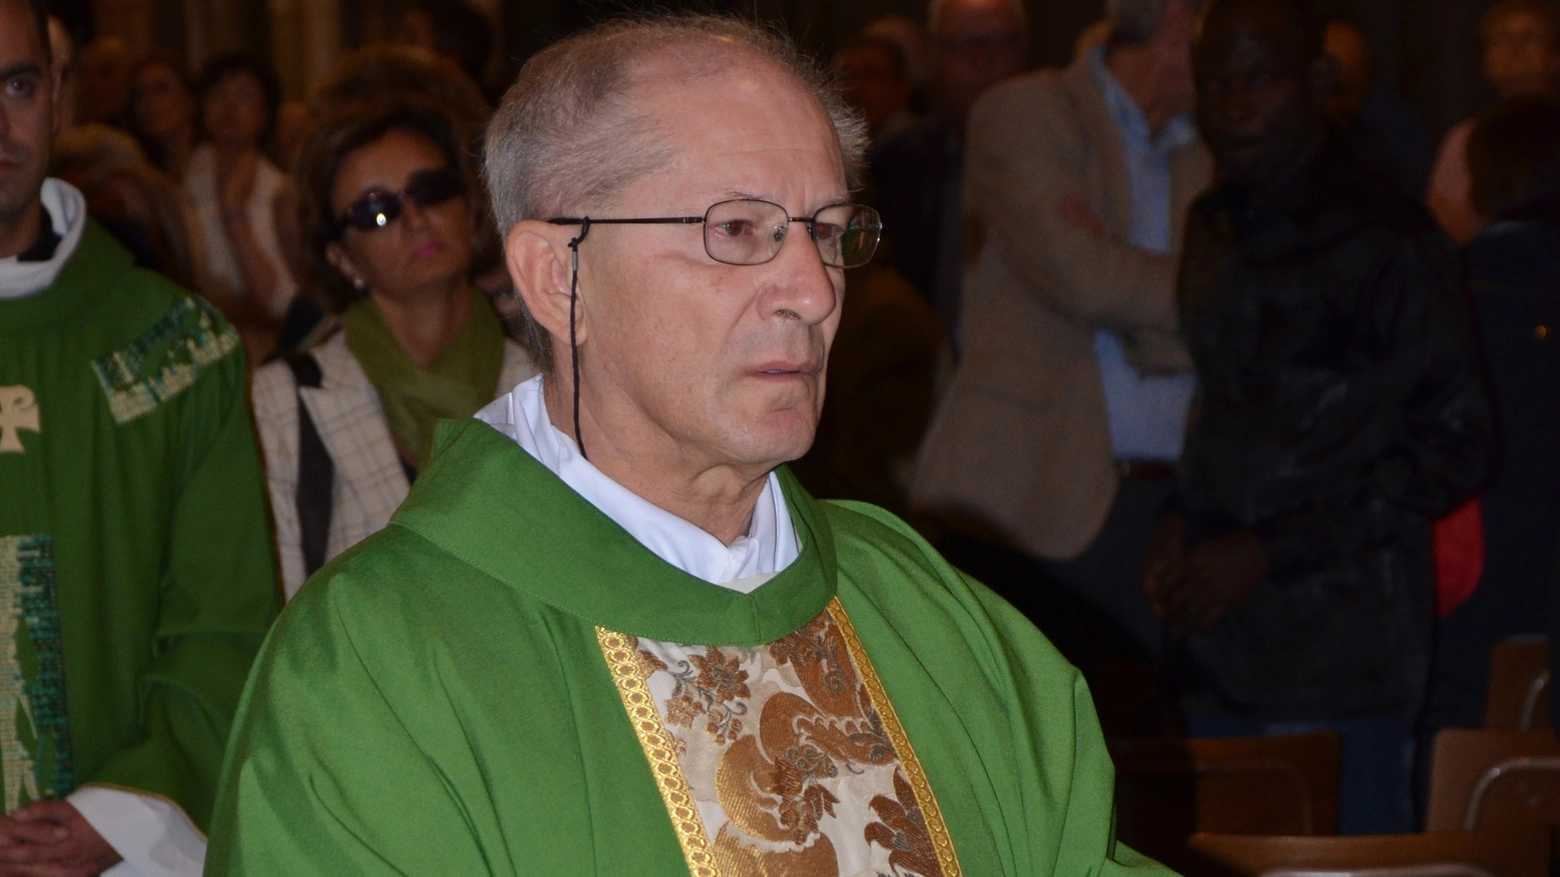 Monsignor Franzini